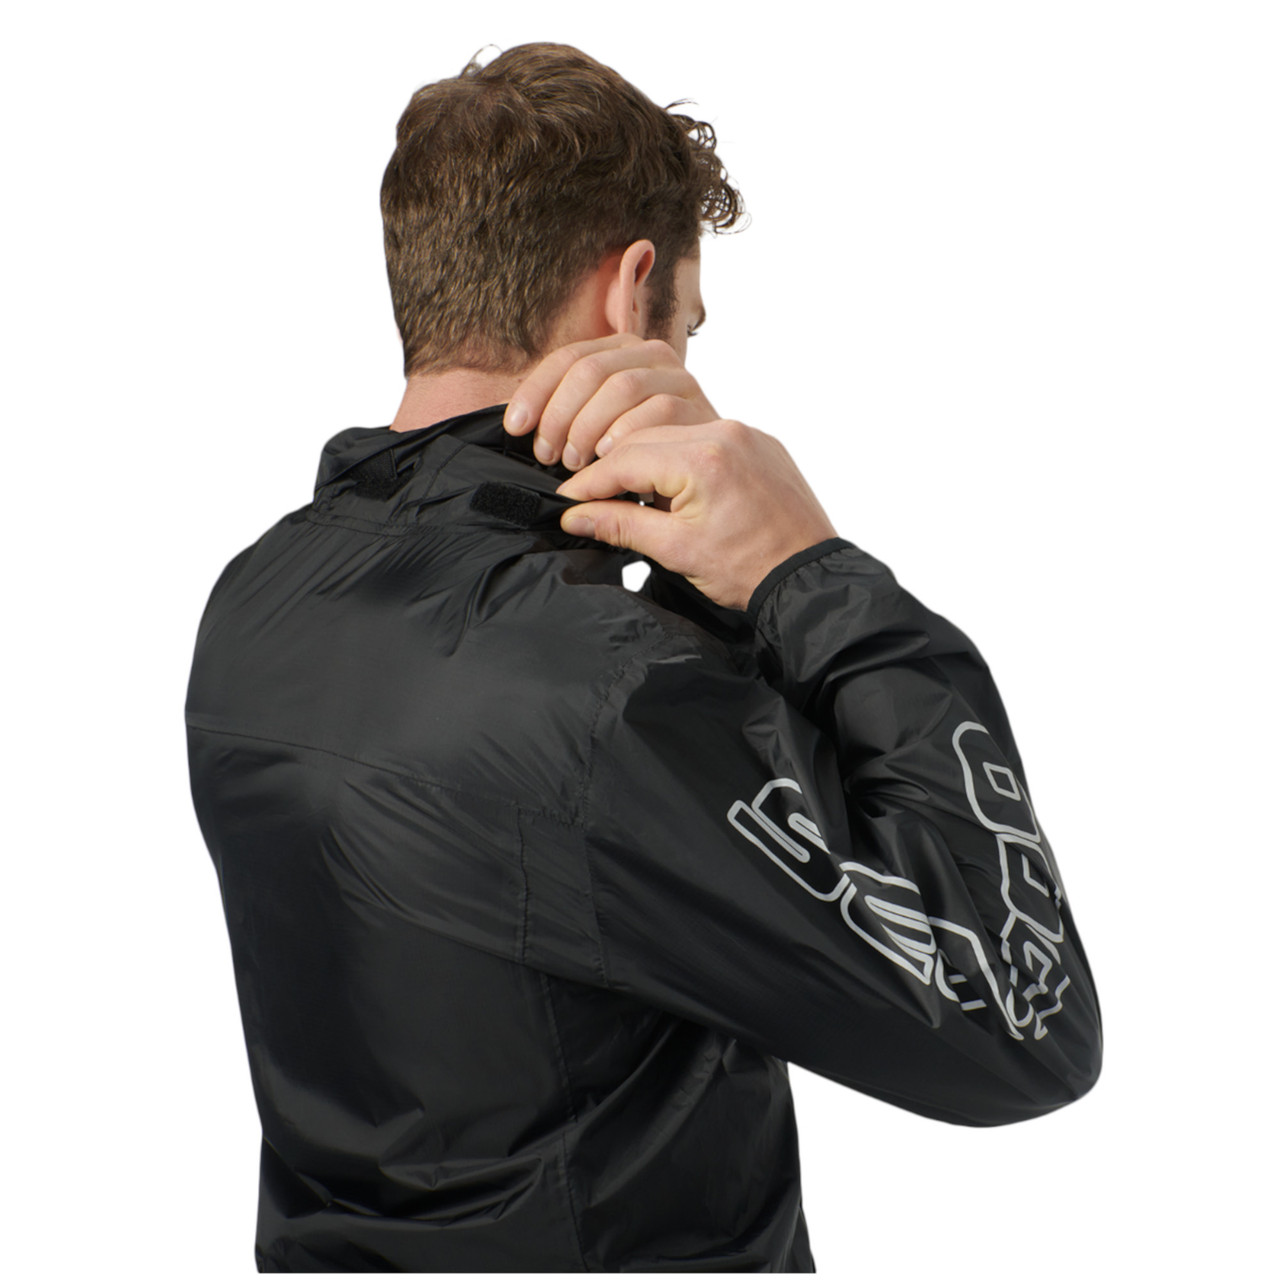 Sea-Doo New OEM, Men's Extra Large Water-Resistant Windproof Jacket, 4547001290